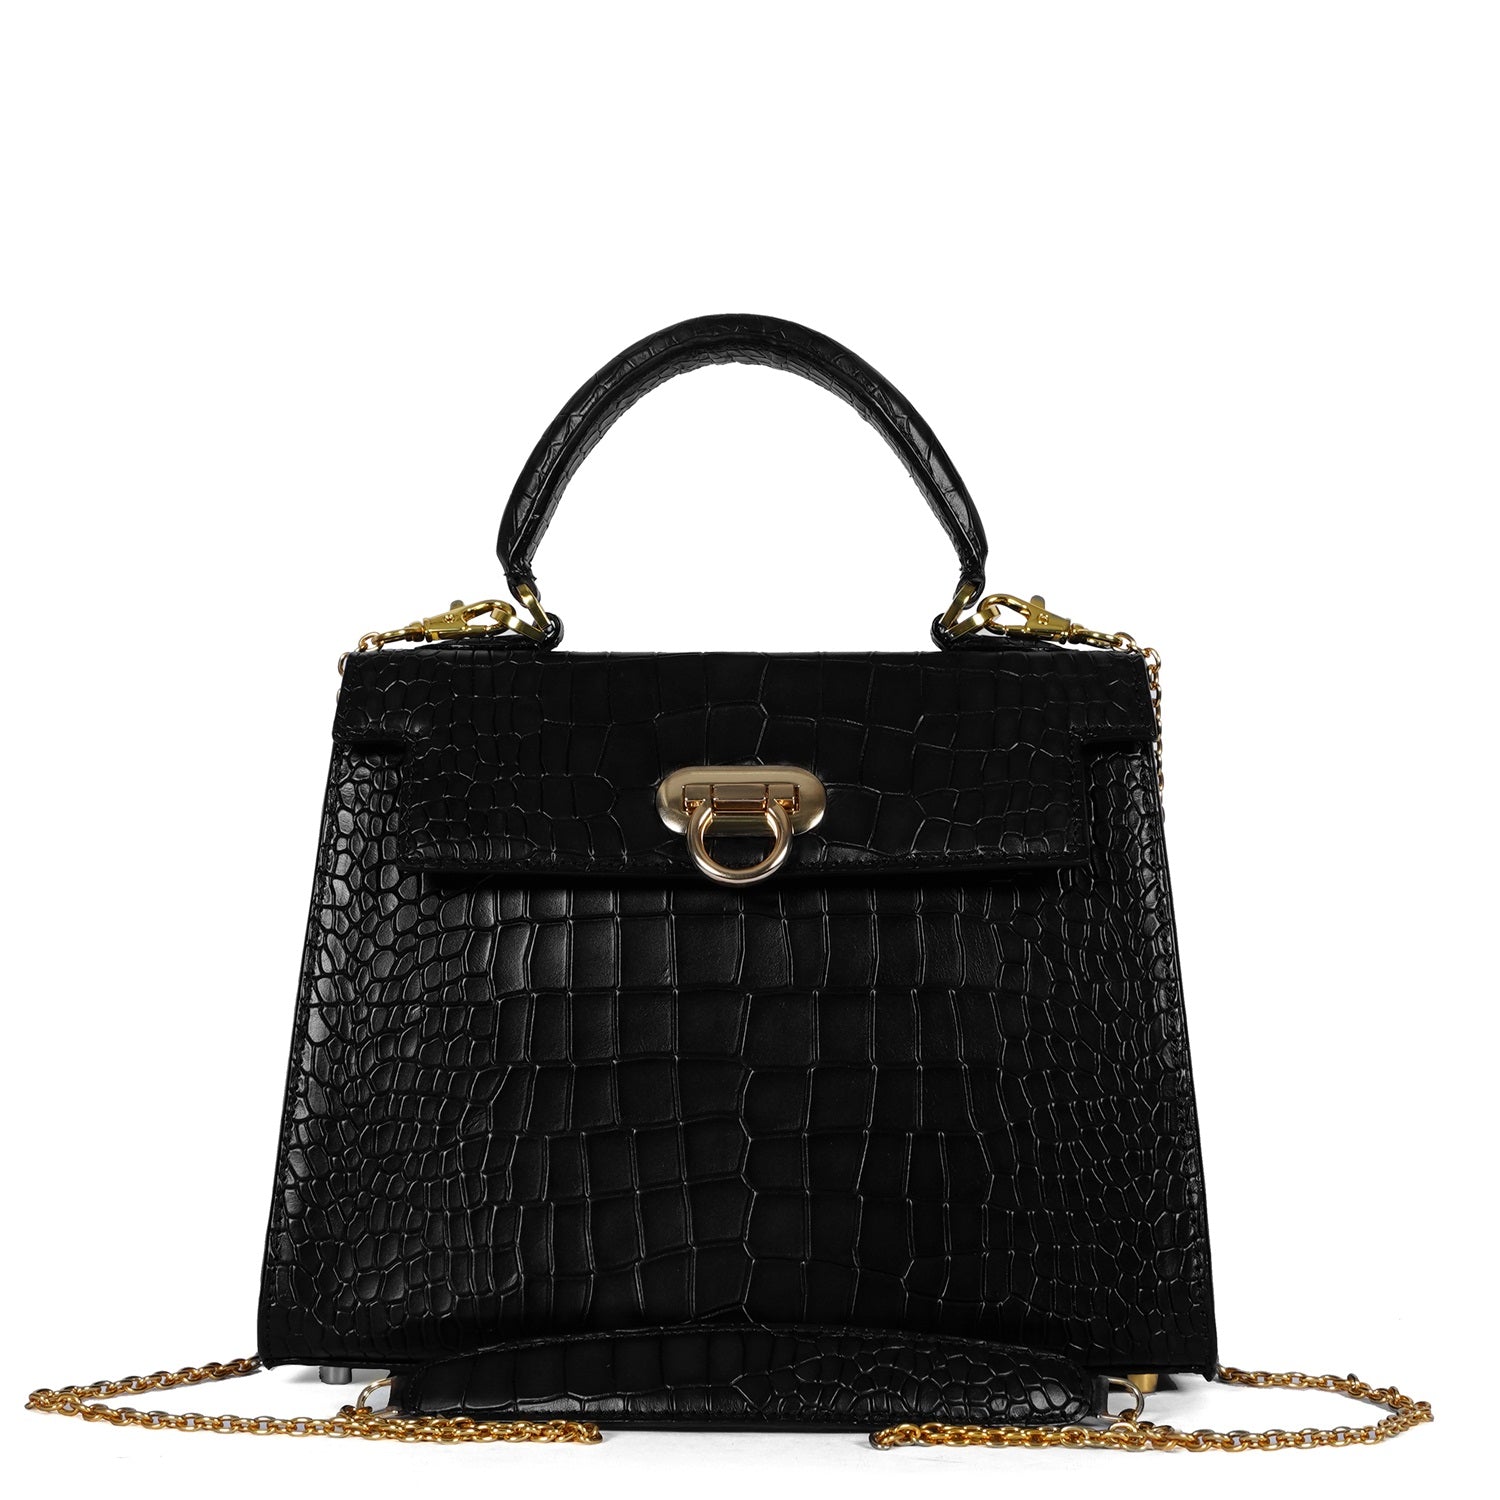 Medium Sized Black Handbag in Deep Cut Leather